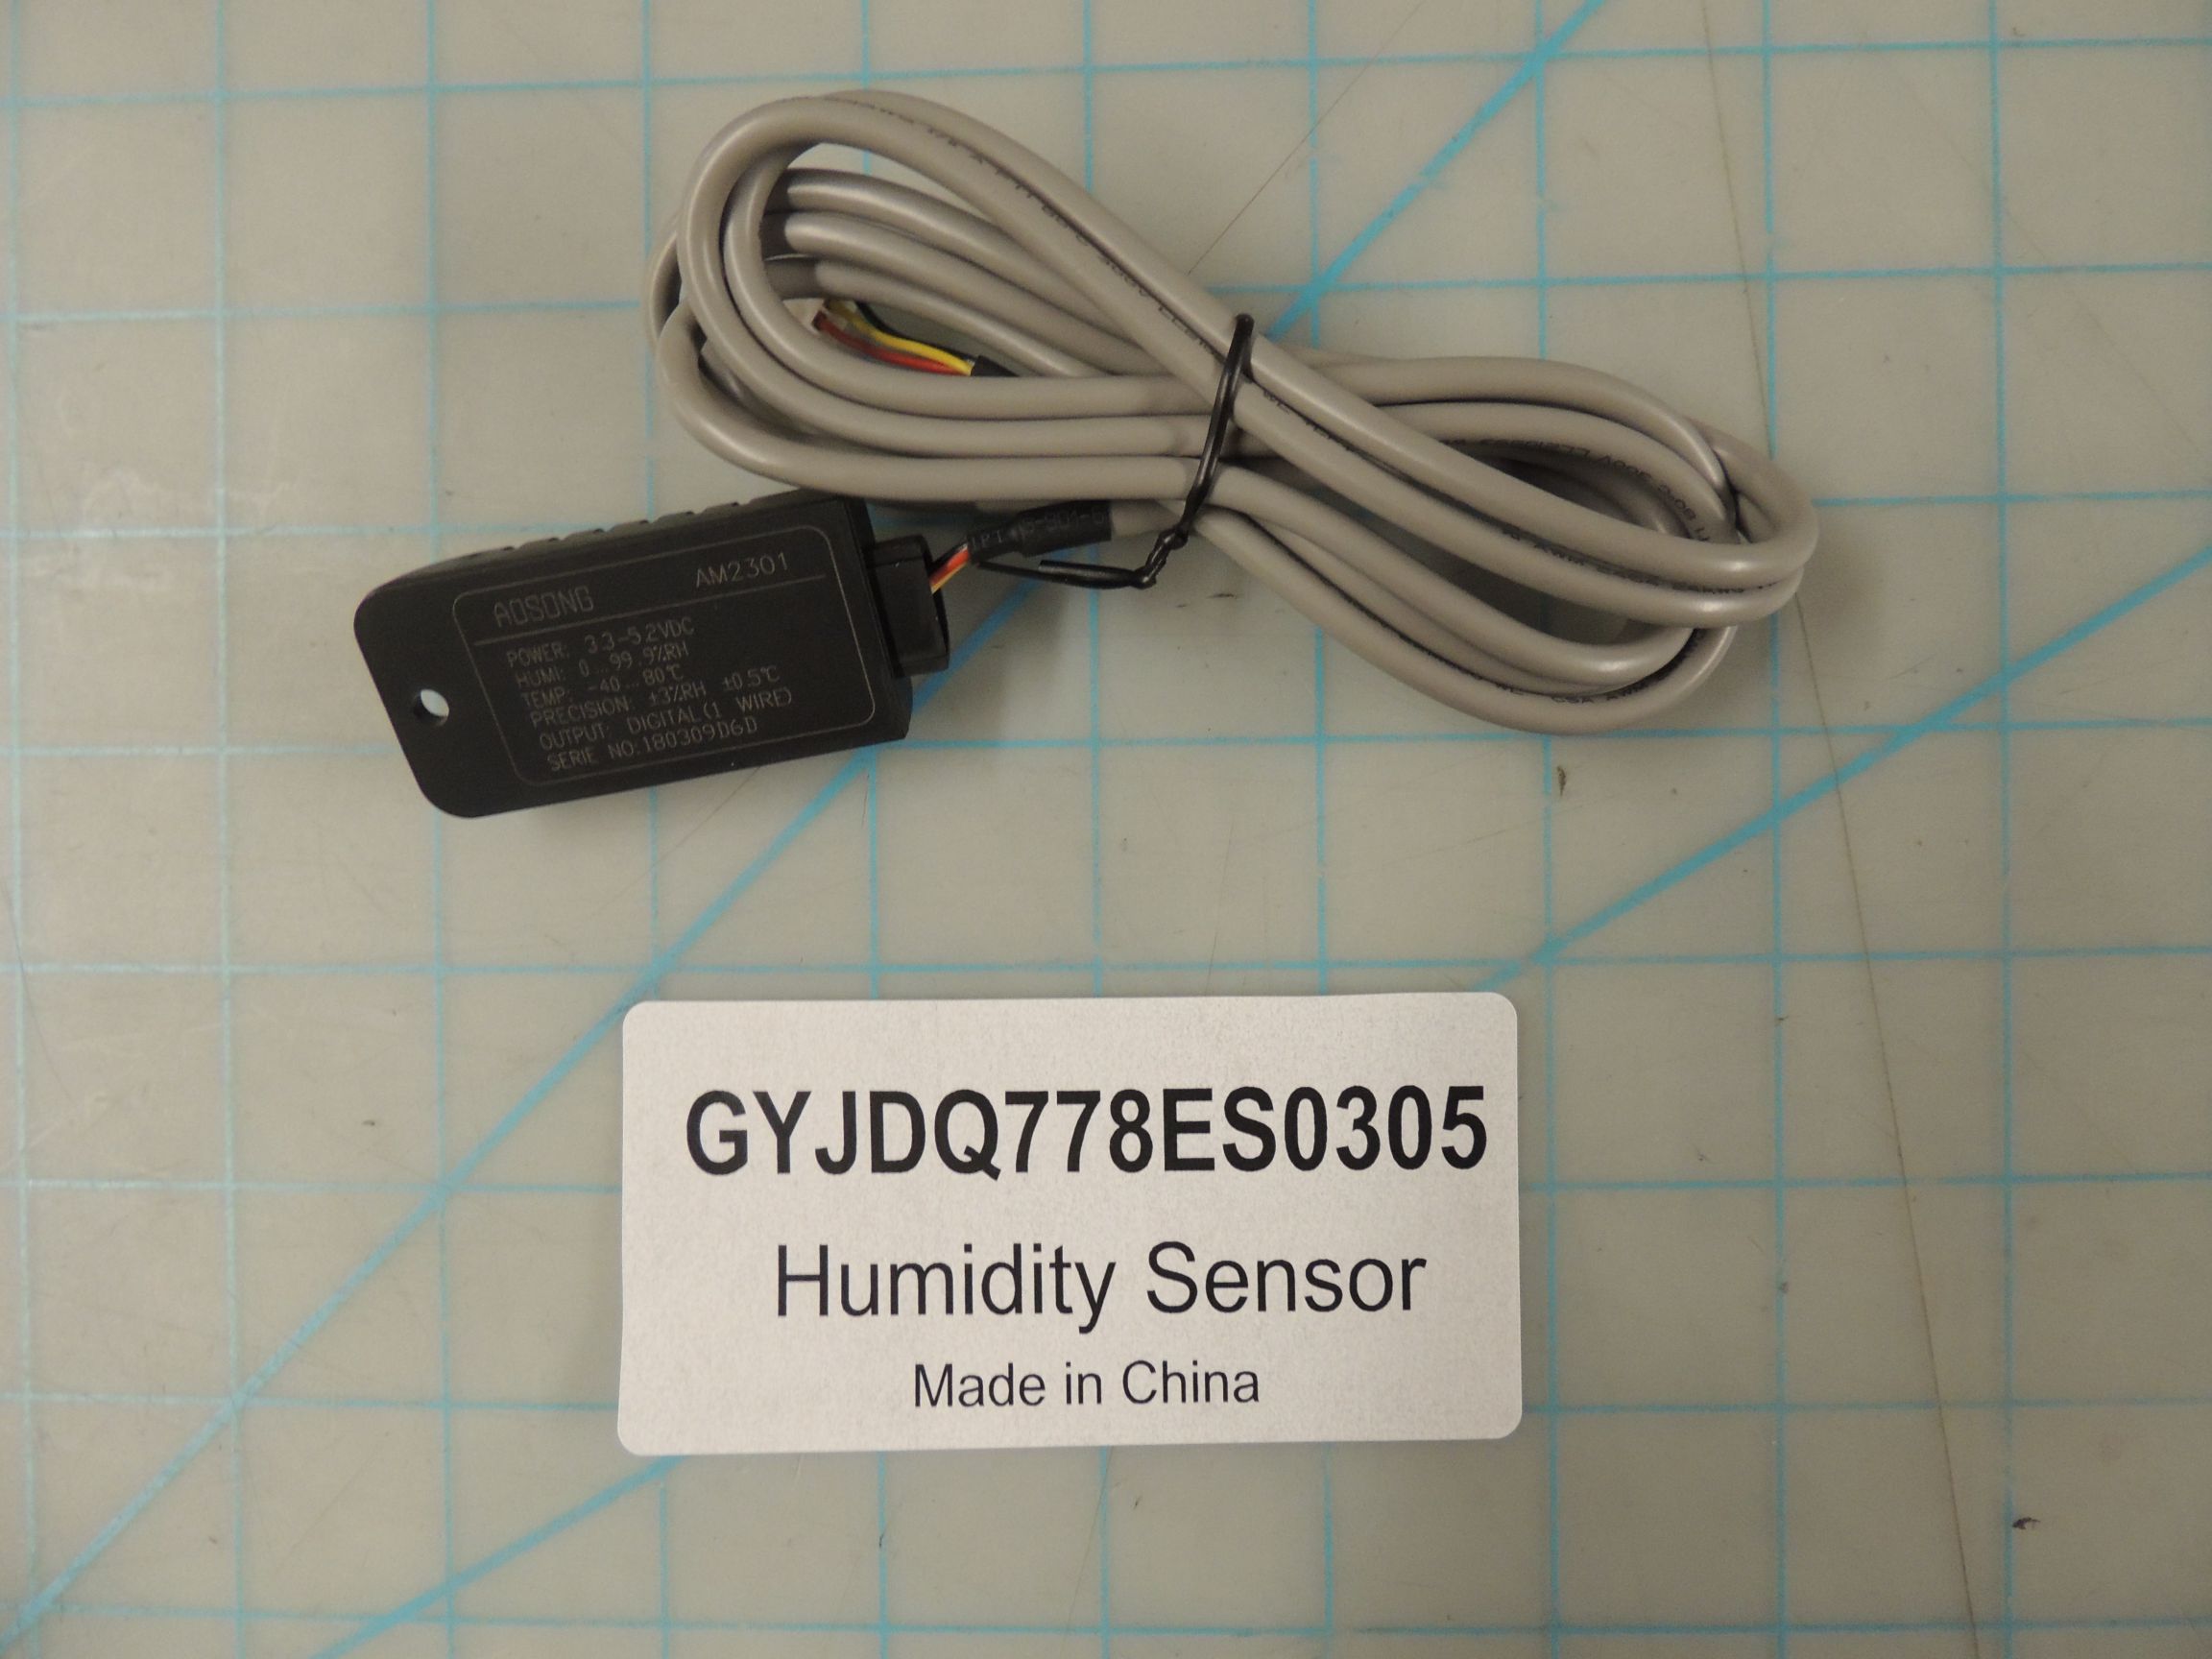 Danby 810900236 Humidity Sensor